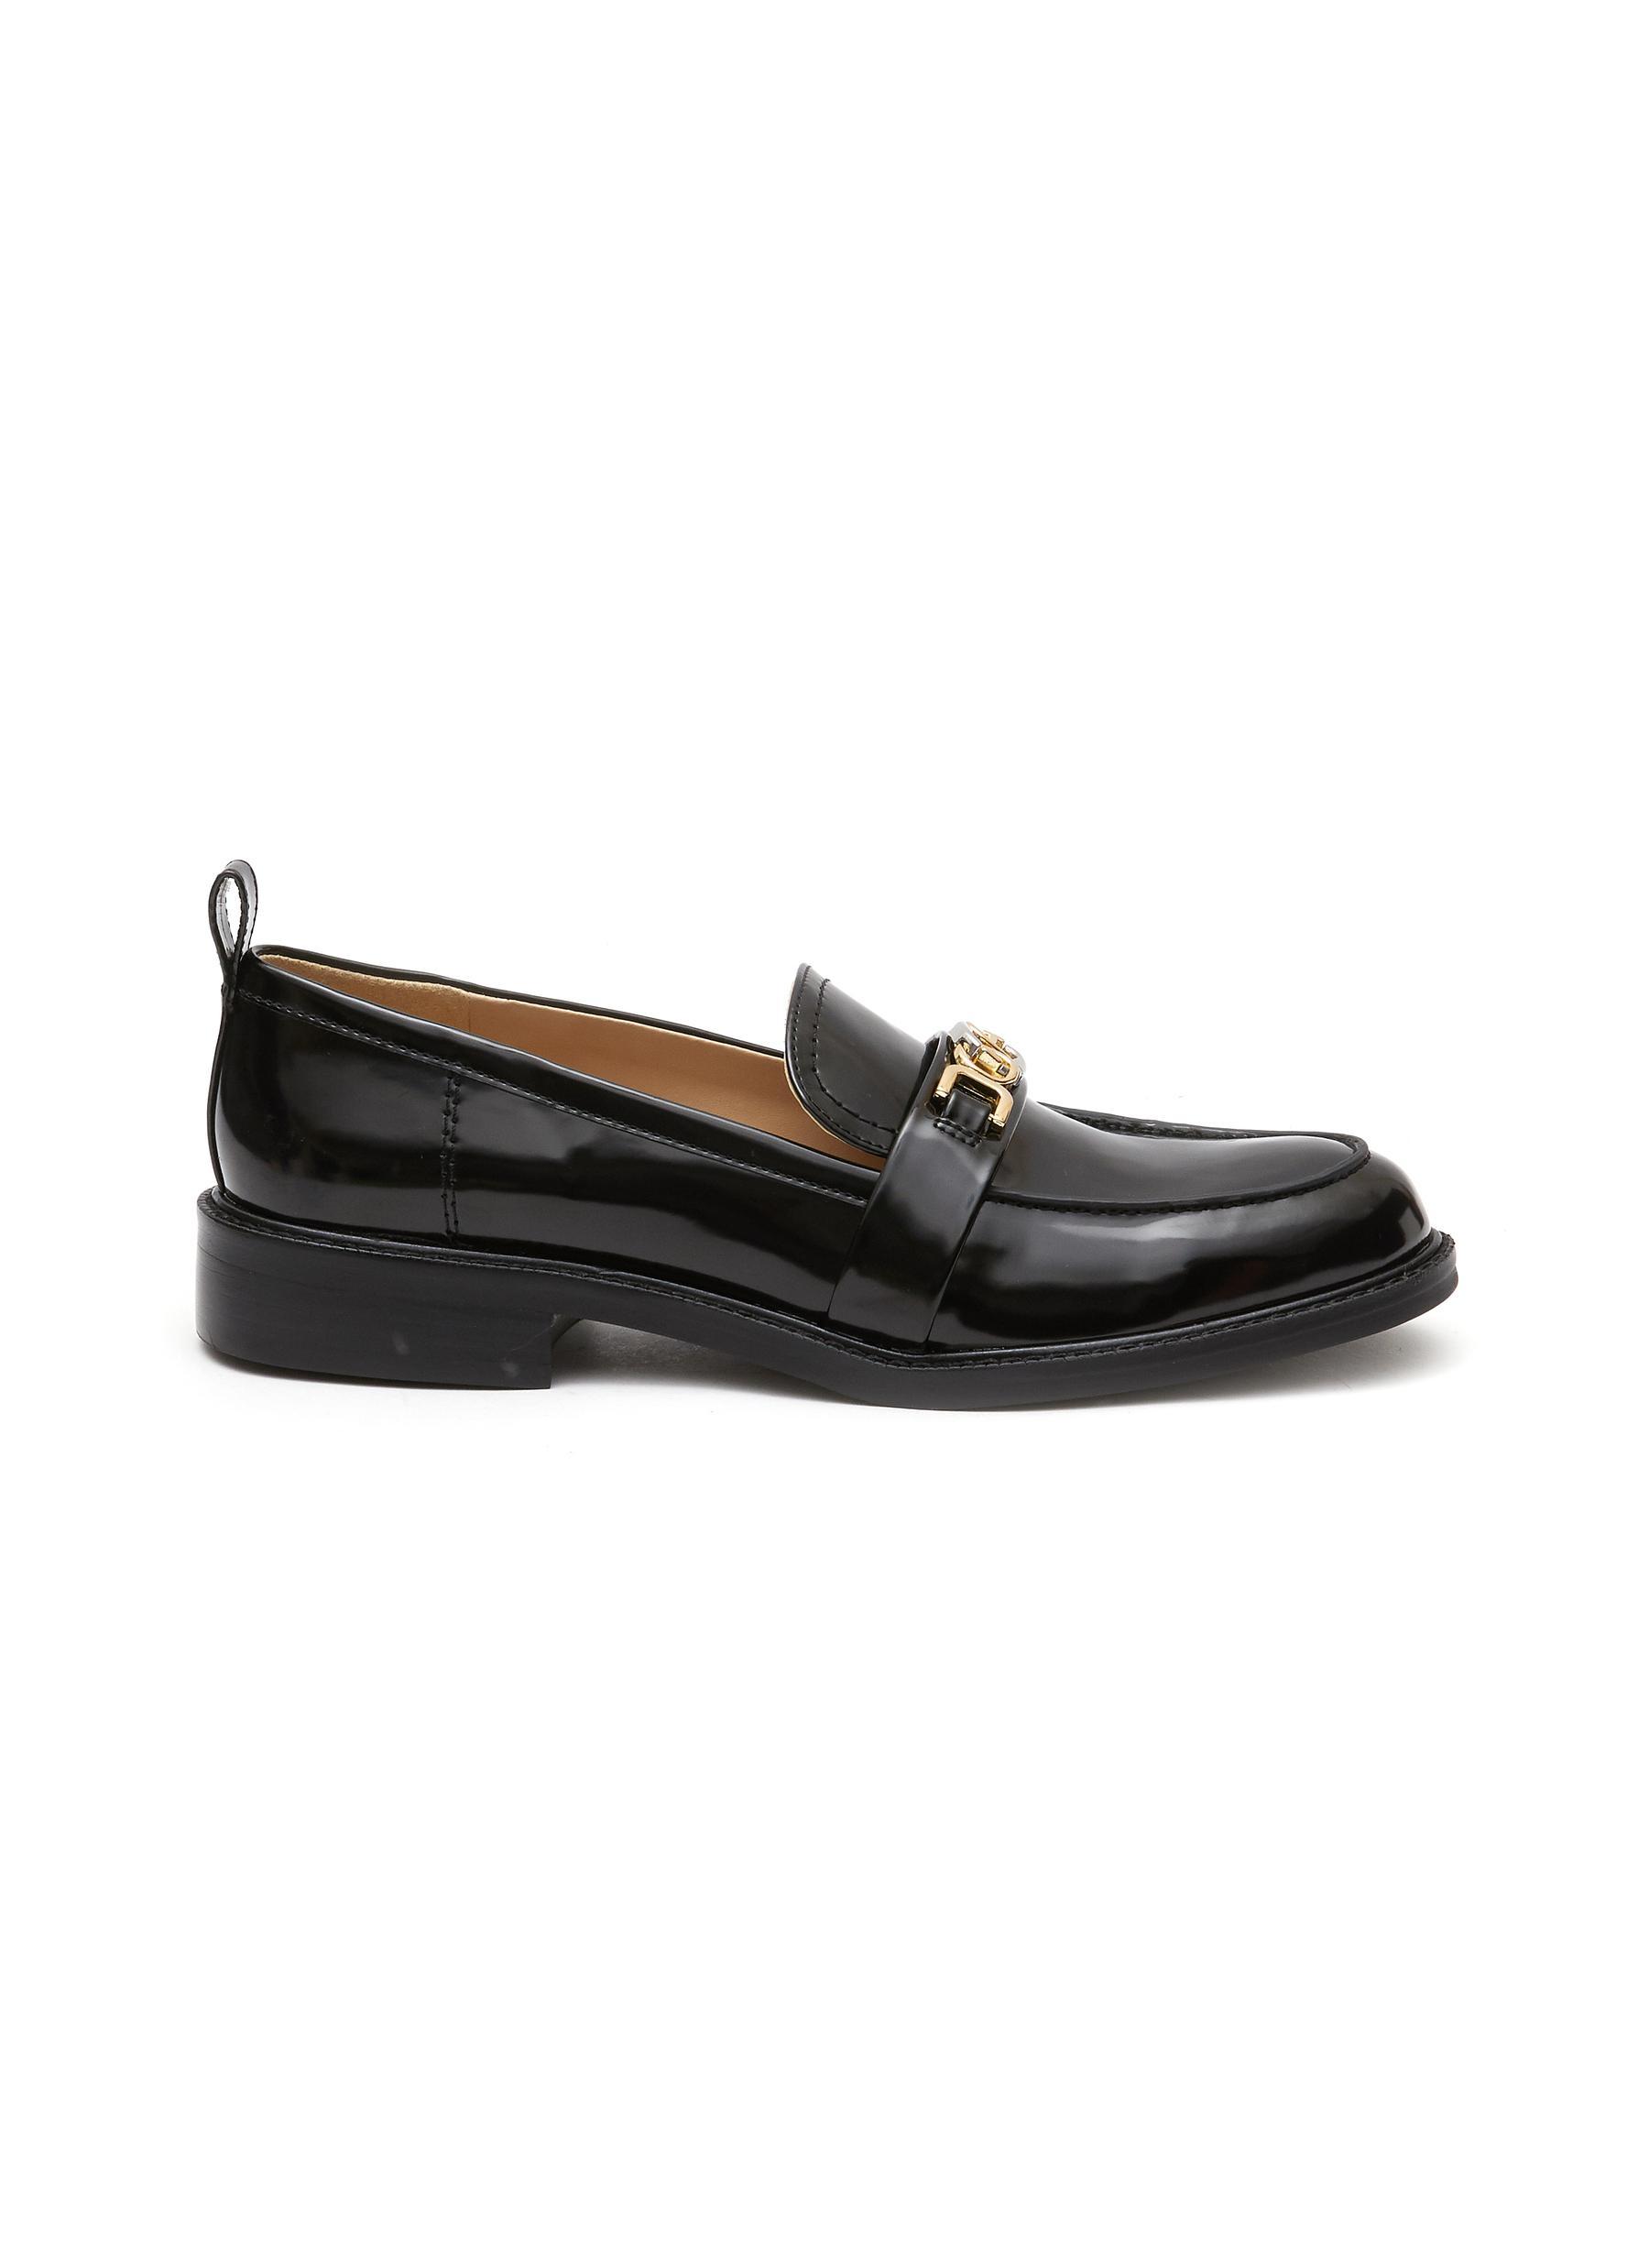 Sam Edelman 'christy' Horsebit Leather Loafers Women Shoes Flats ...